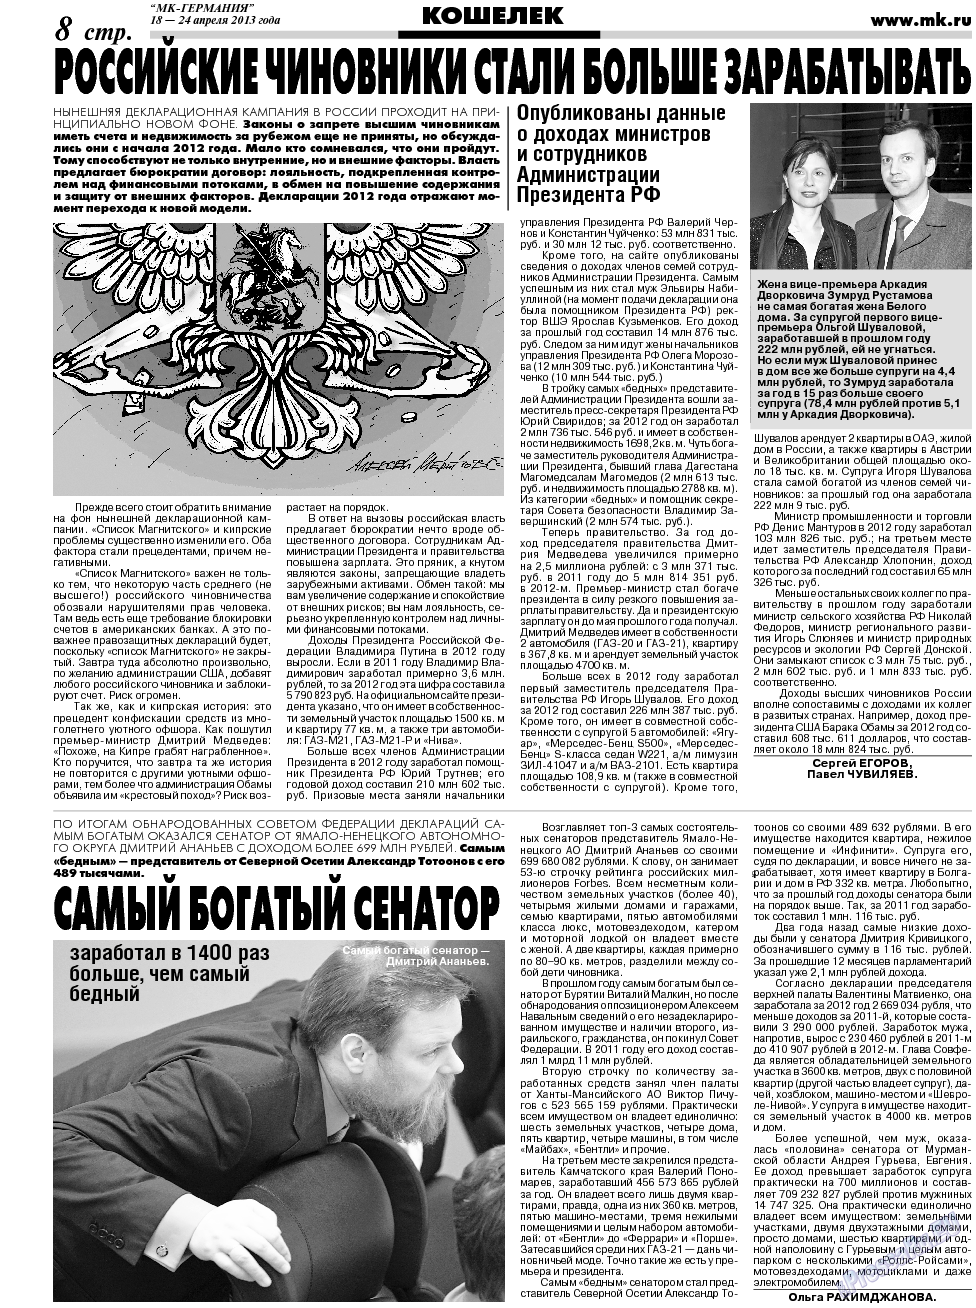 МК-Германия, газета. 2013 №16 стр.8